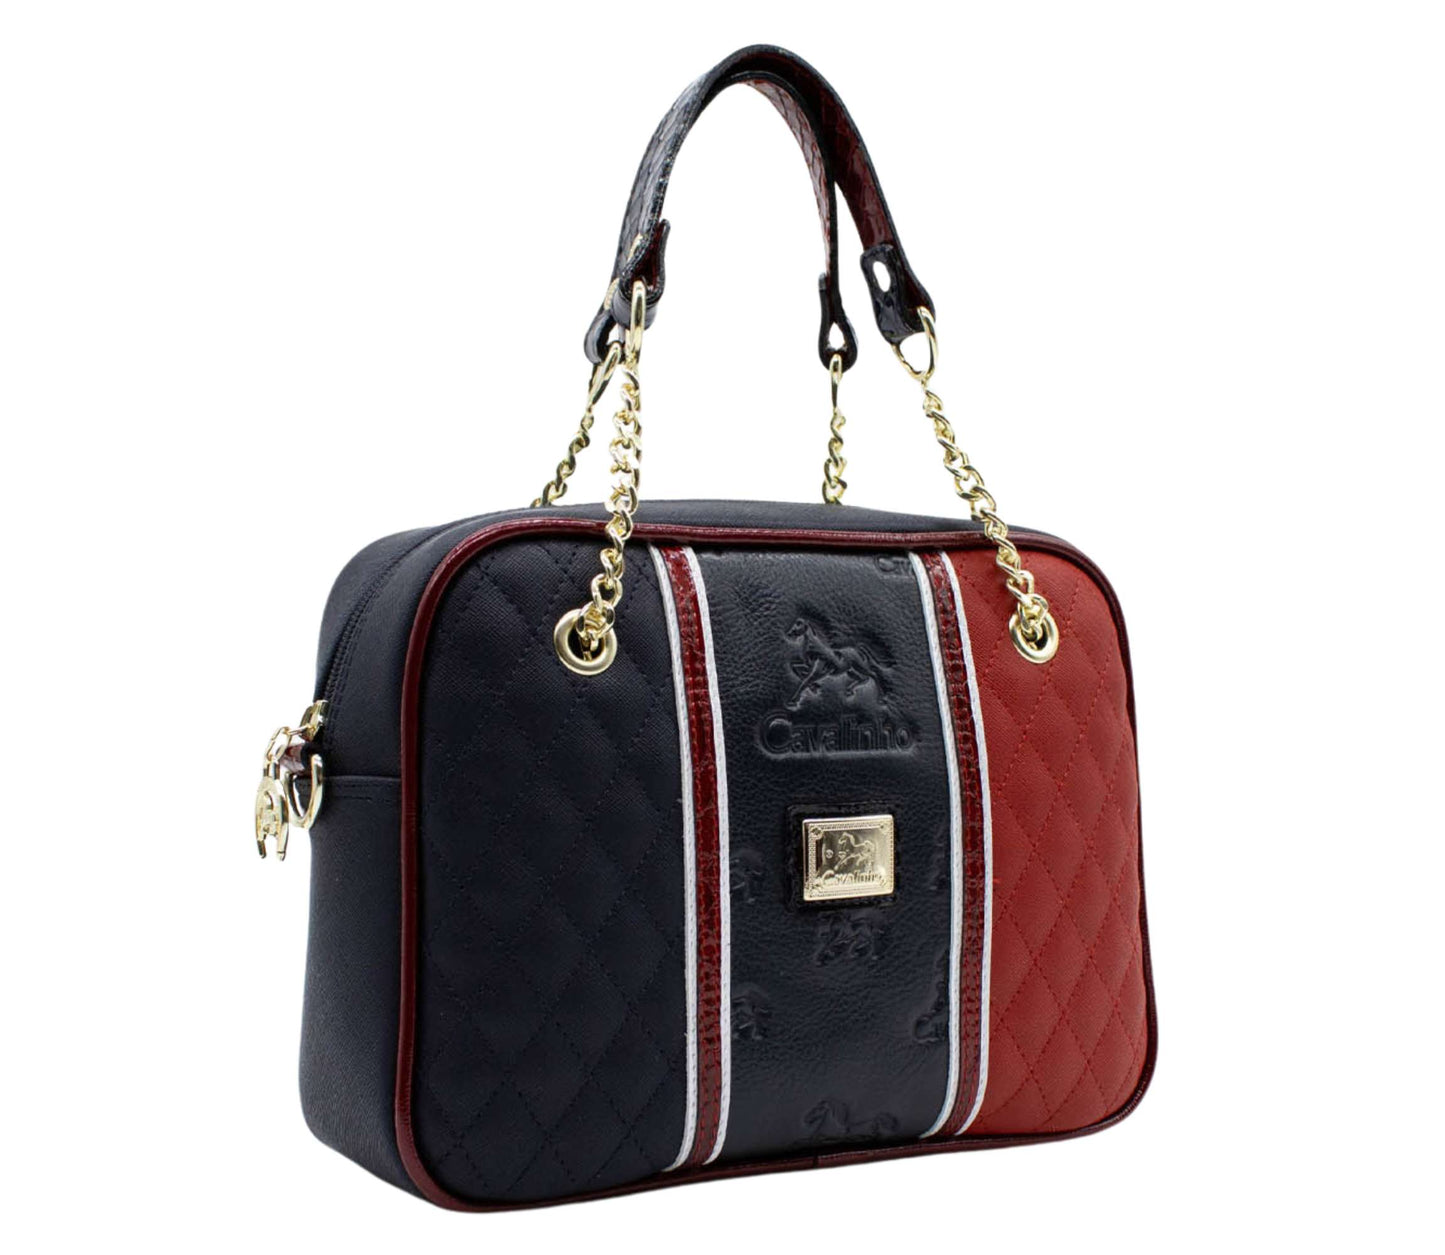 Cavalinho Prestige Handbag - Navy / White / Red - 18450512.22_2